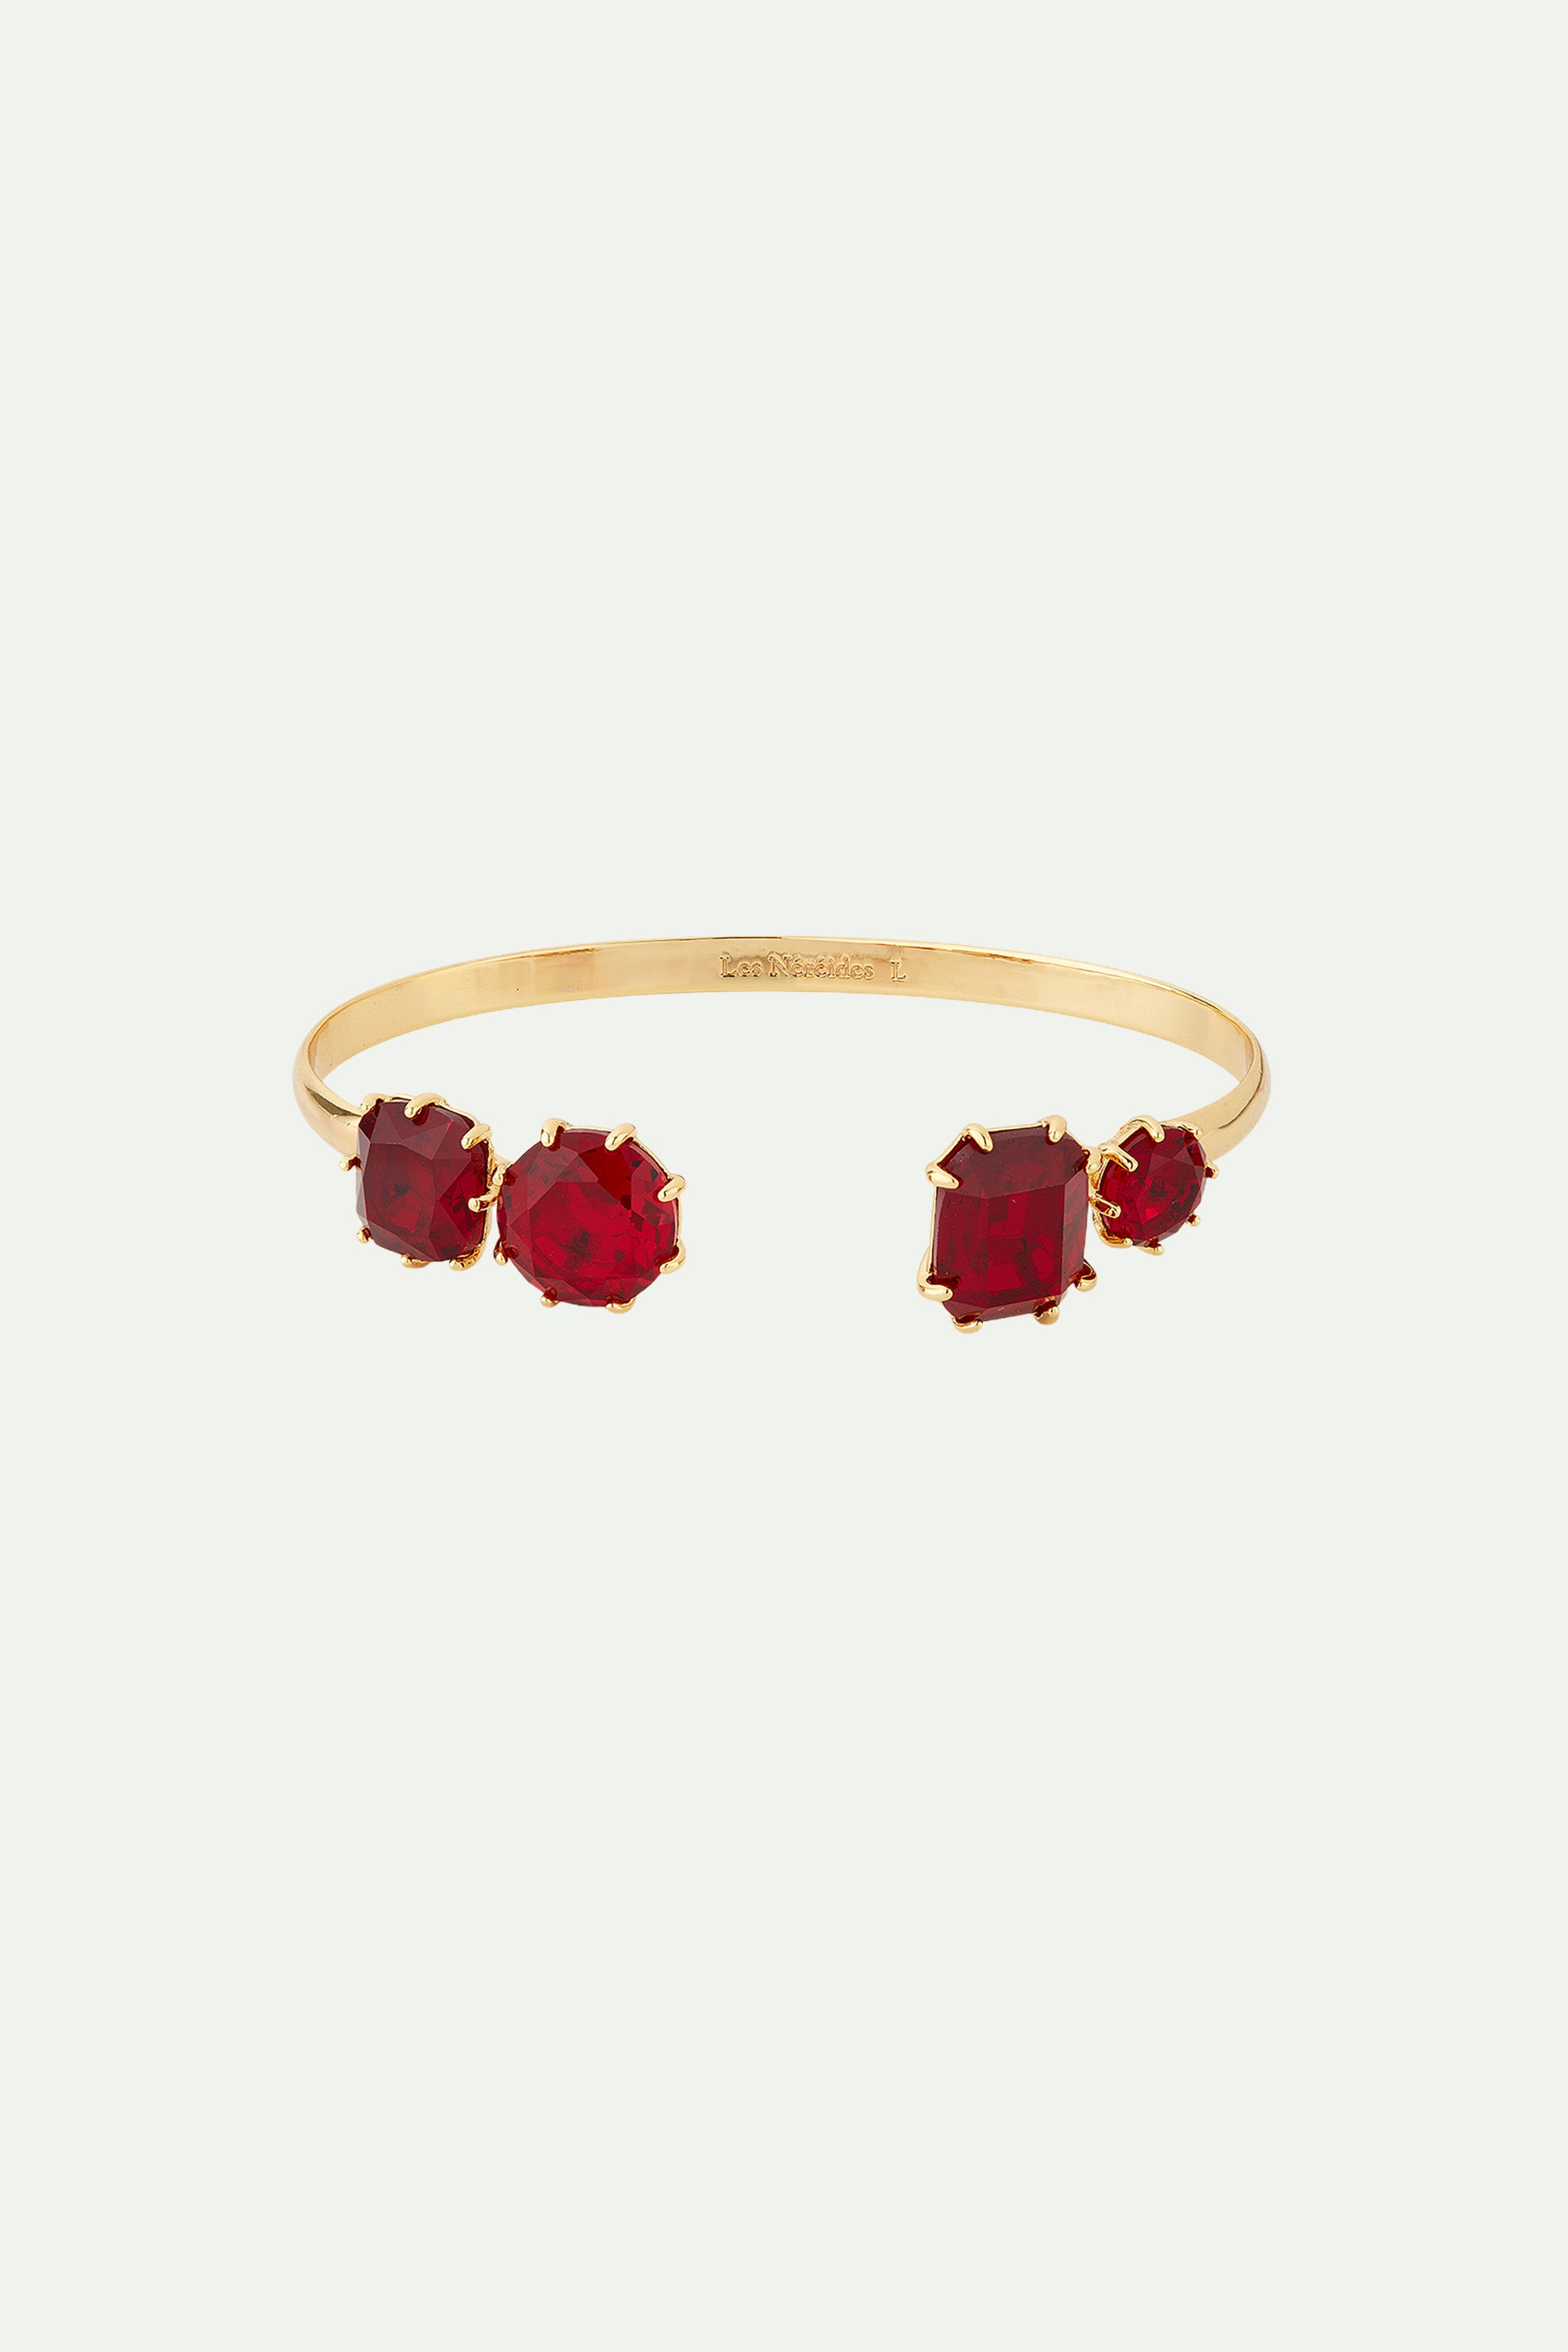 Garnet red diamantine 4 stone bangle bracelet